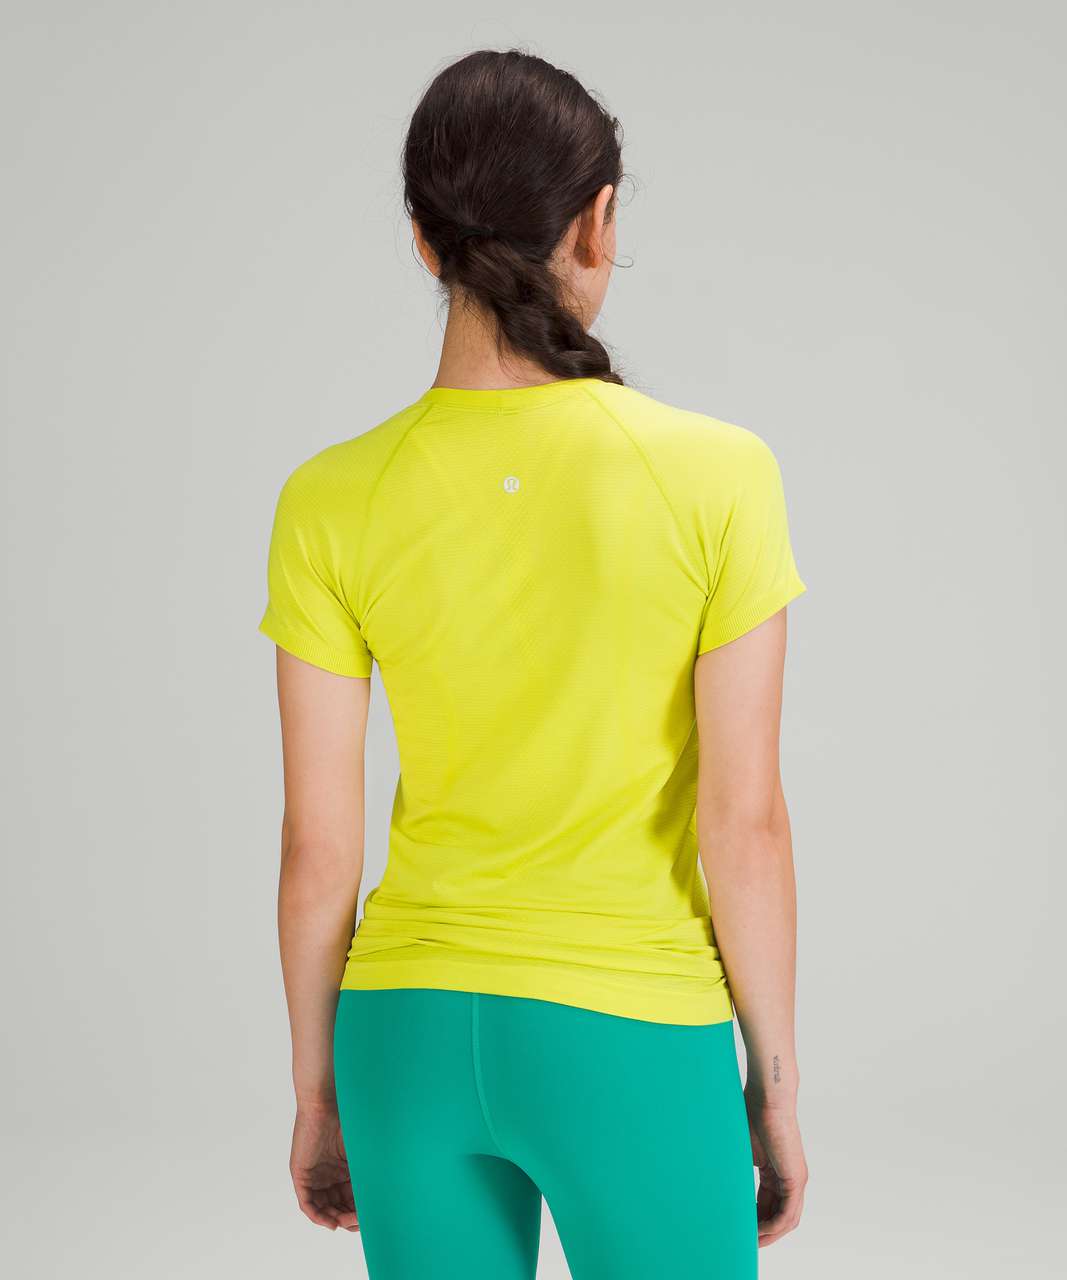 Lululemon Swiftly Tech Short Sleeve Shirt 2.0 - Yellow Serpentine / Yellow Serpentine